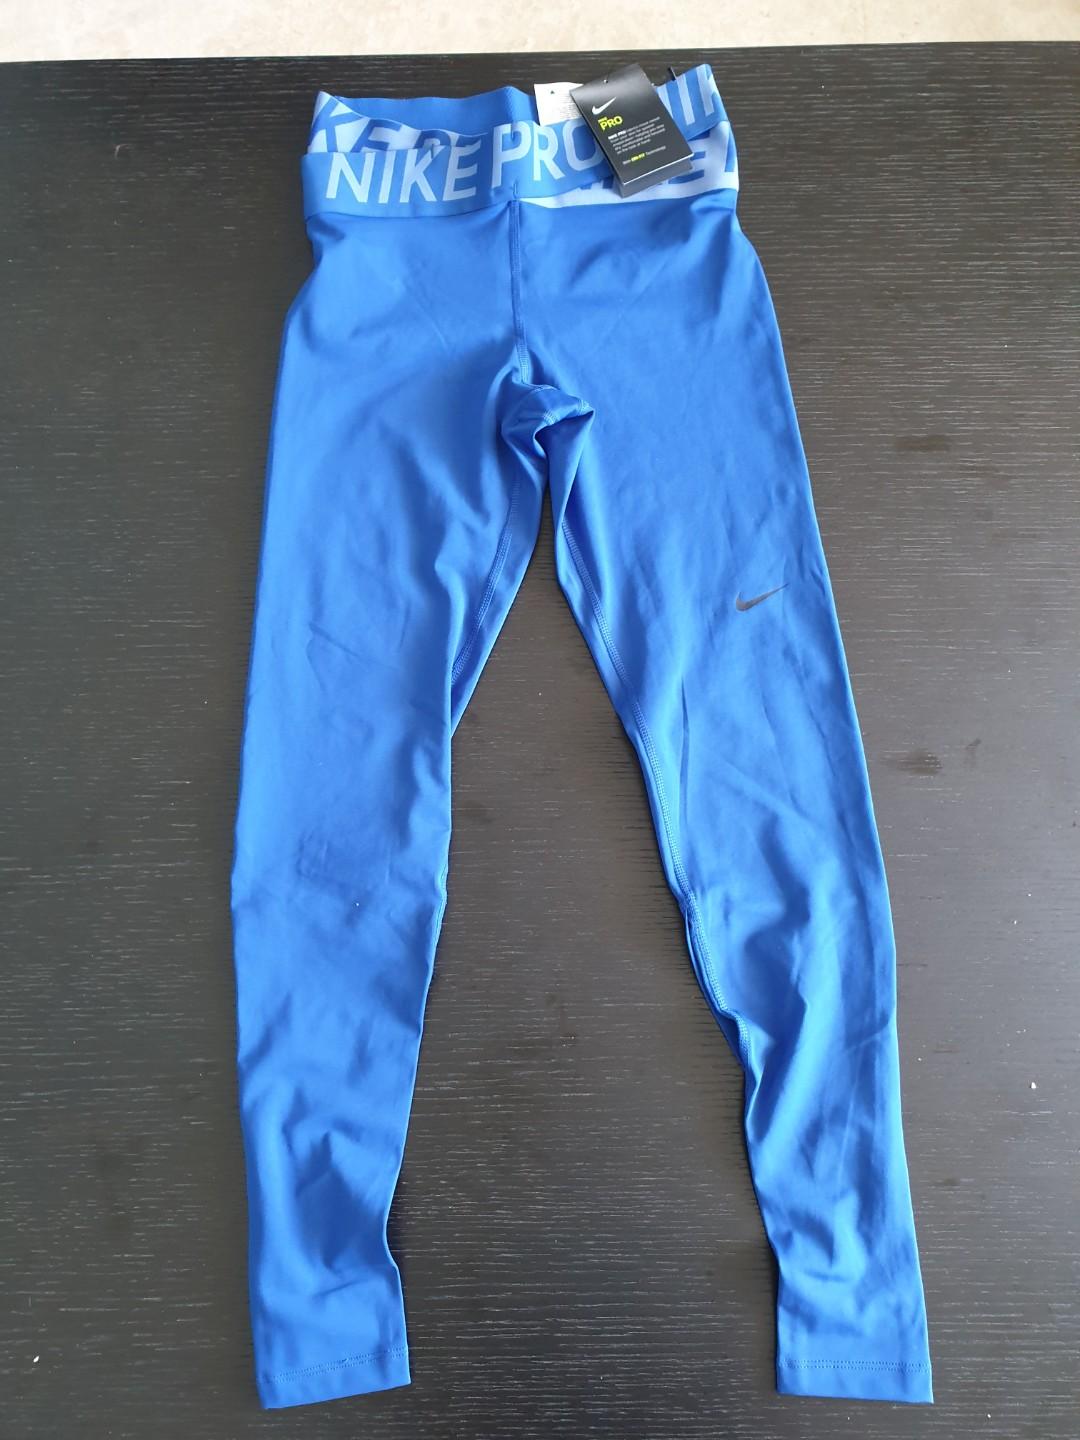 blue nike pro leggings